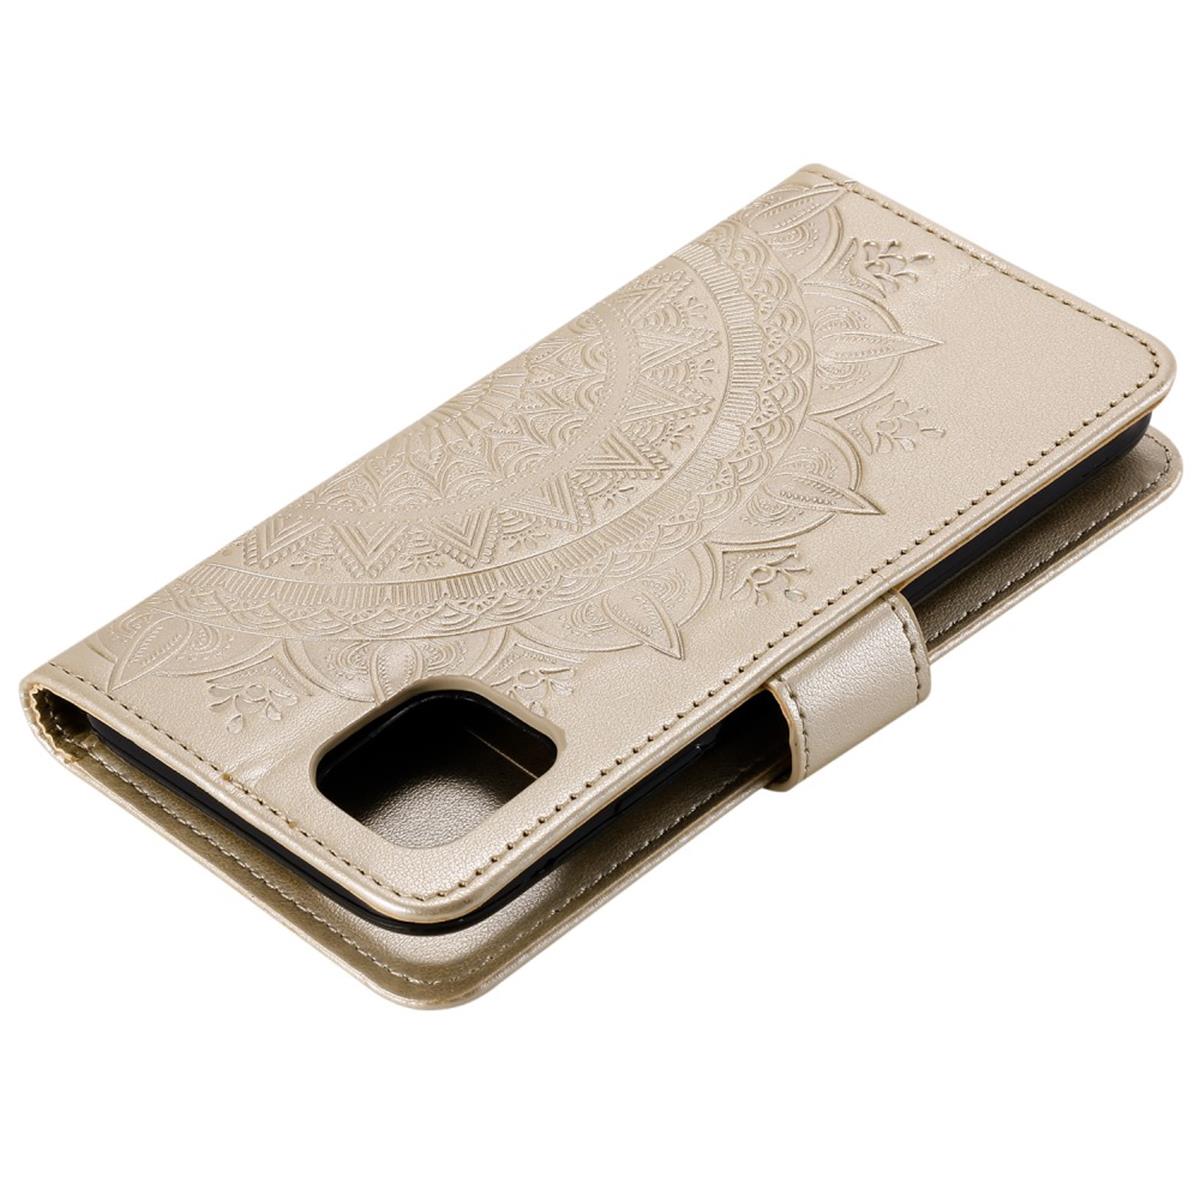 Hülle für Apple iPhone 12 Mini Handyhülle Flip Case Cover Tasche Mandala Gold